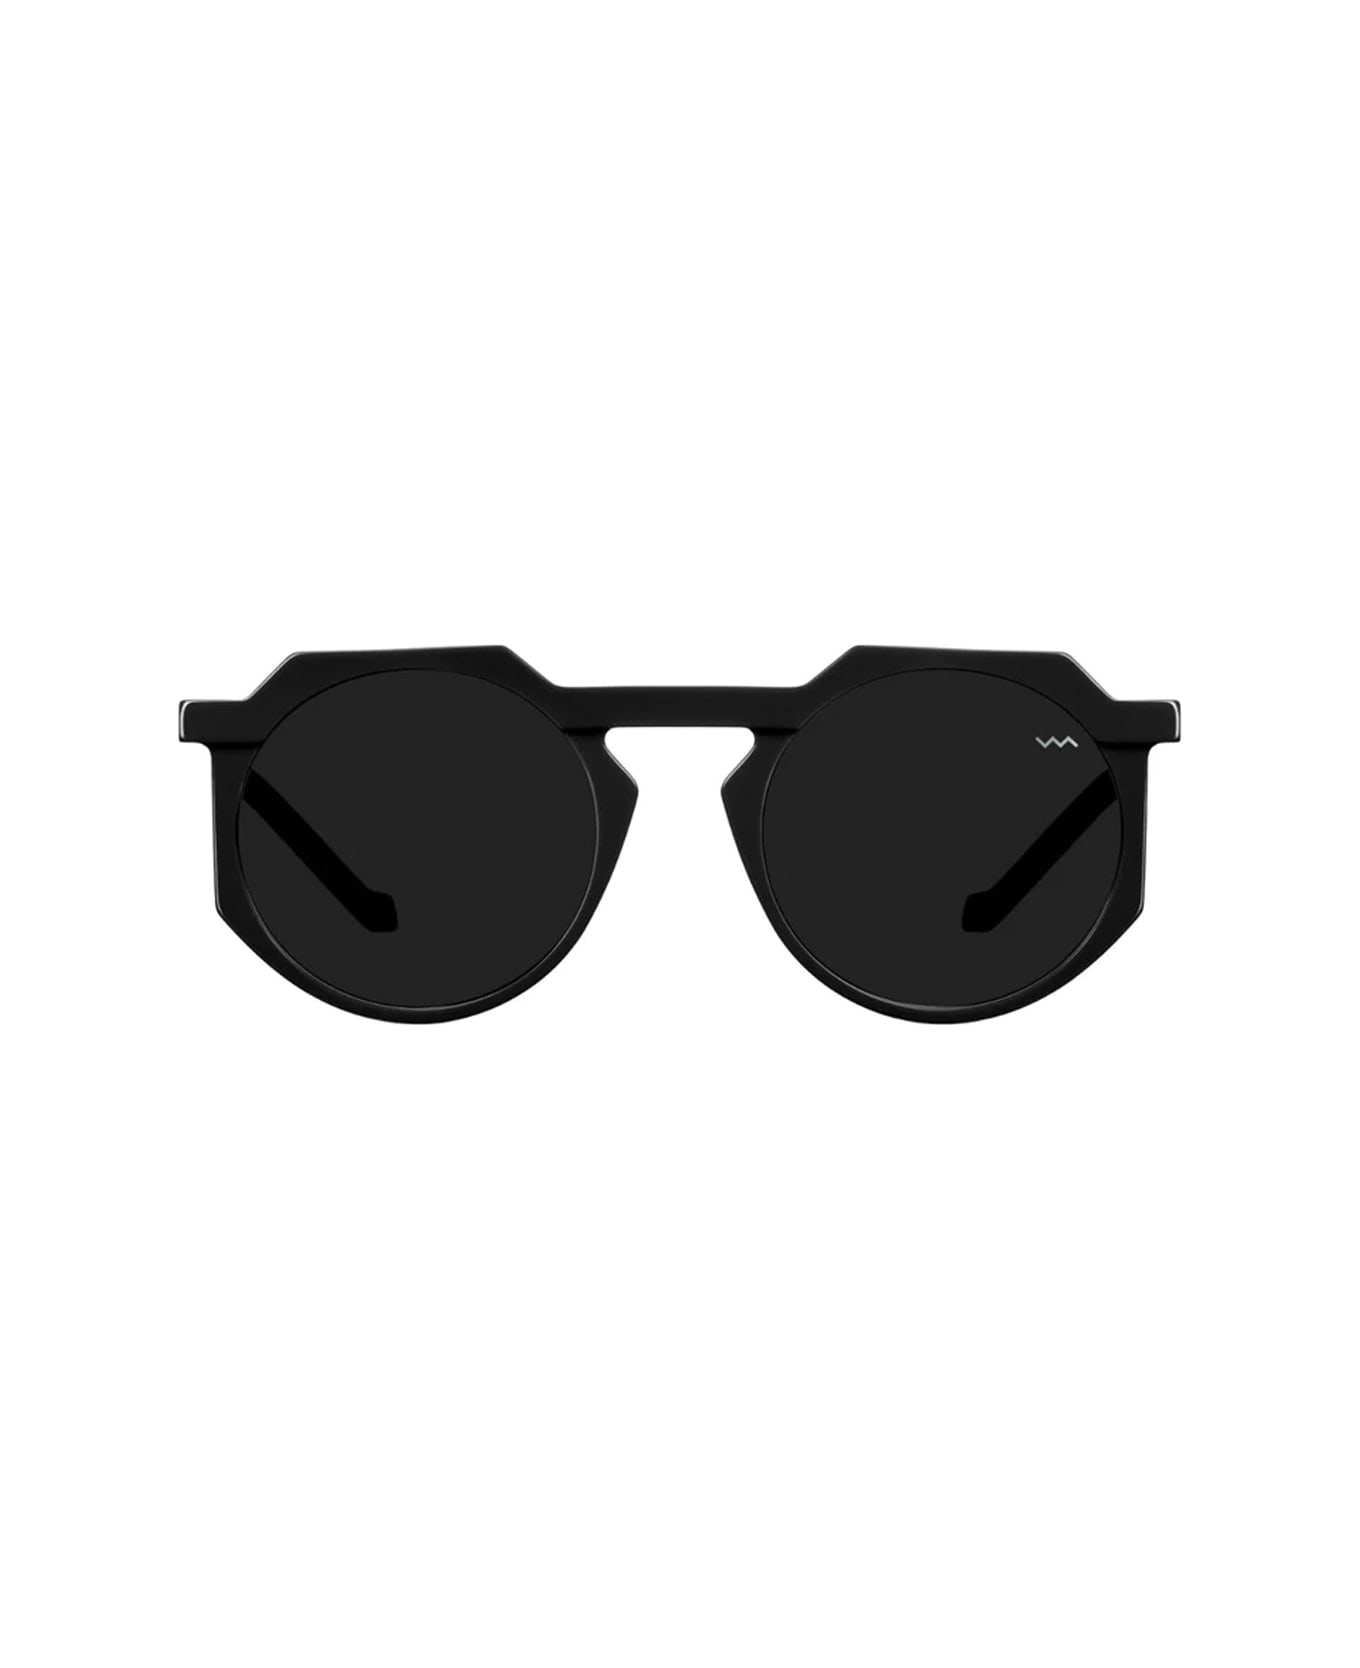 VAVA Wl0028 Black Sunglasses - Nero サングラス